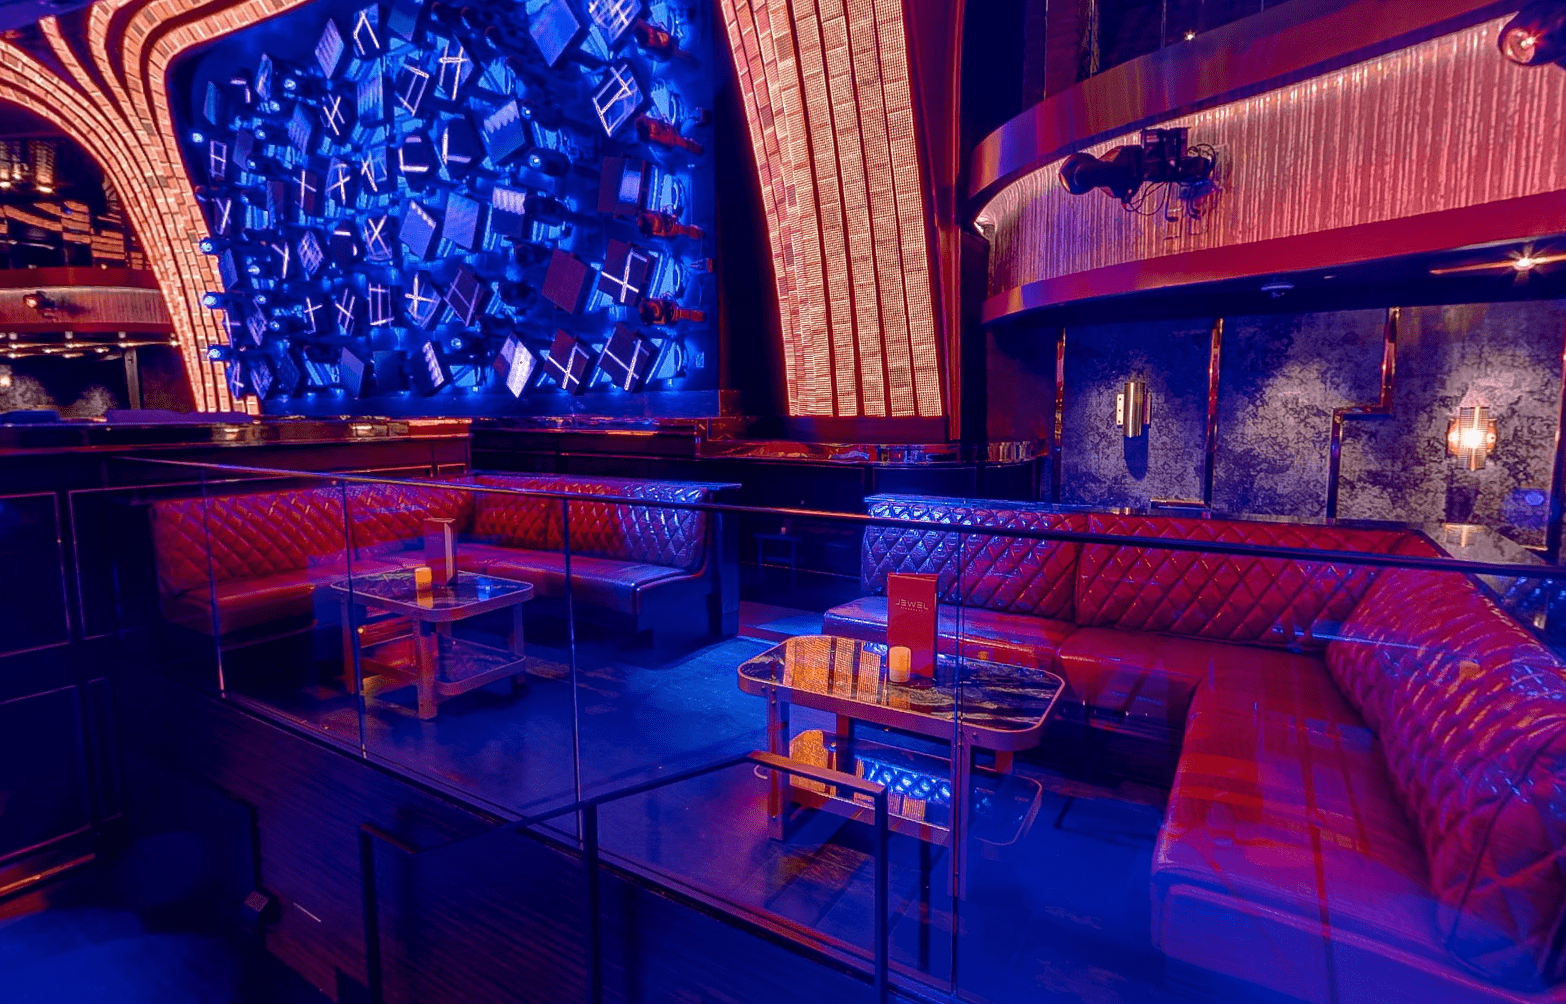 Jewel Nightclub stage dj booth table